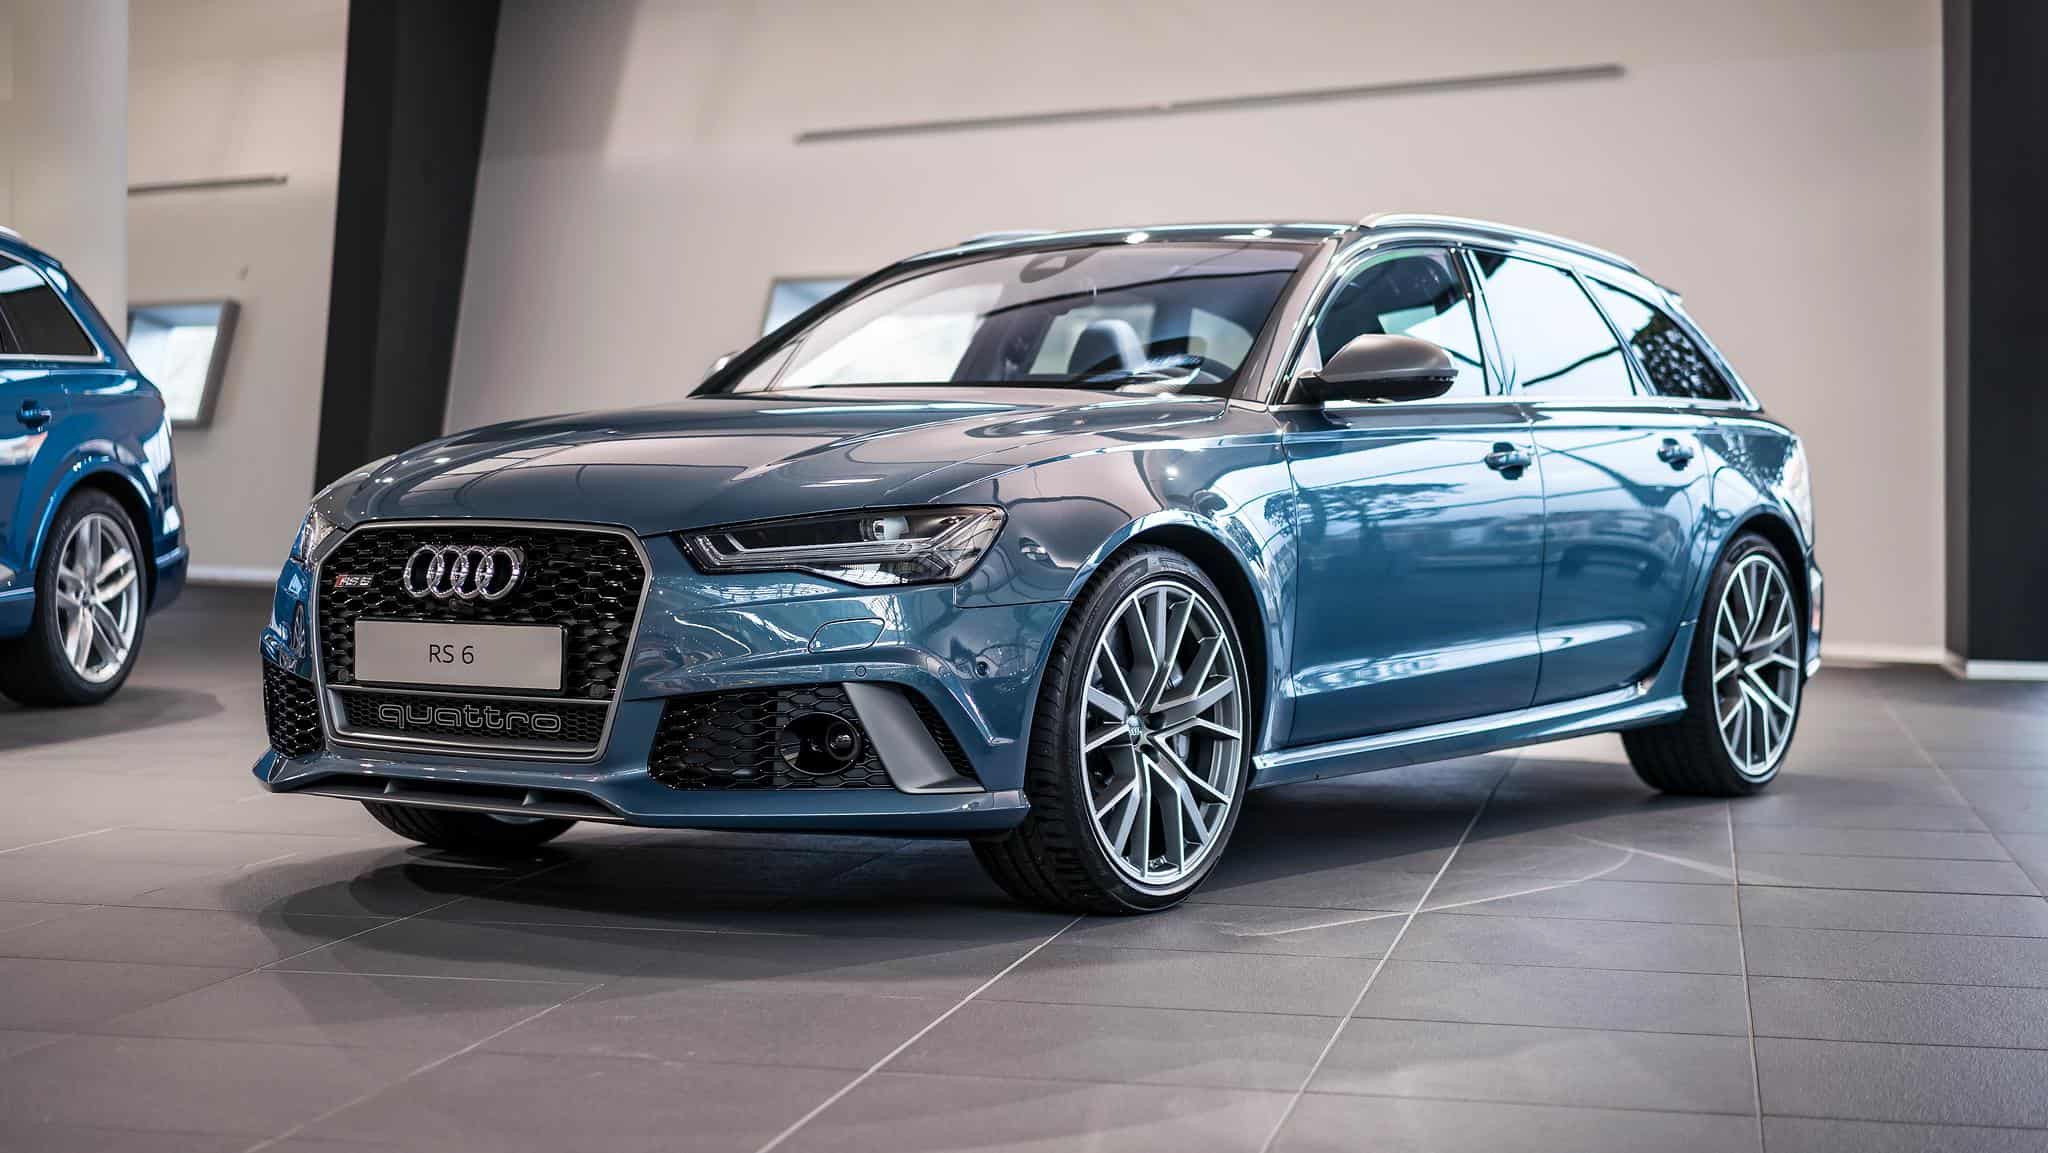 [Audi] RS6 Exclusive in Polar Blau Metallic